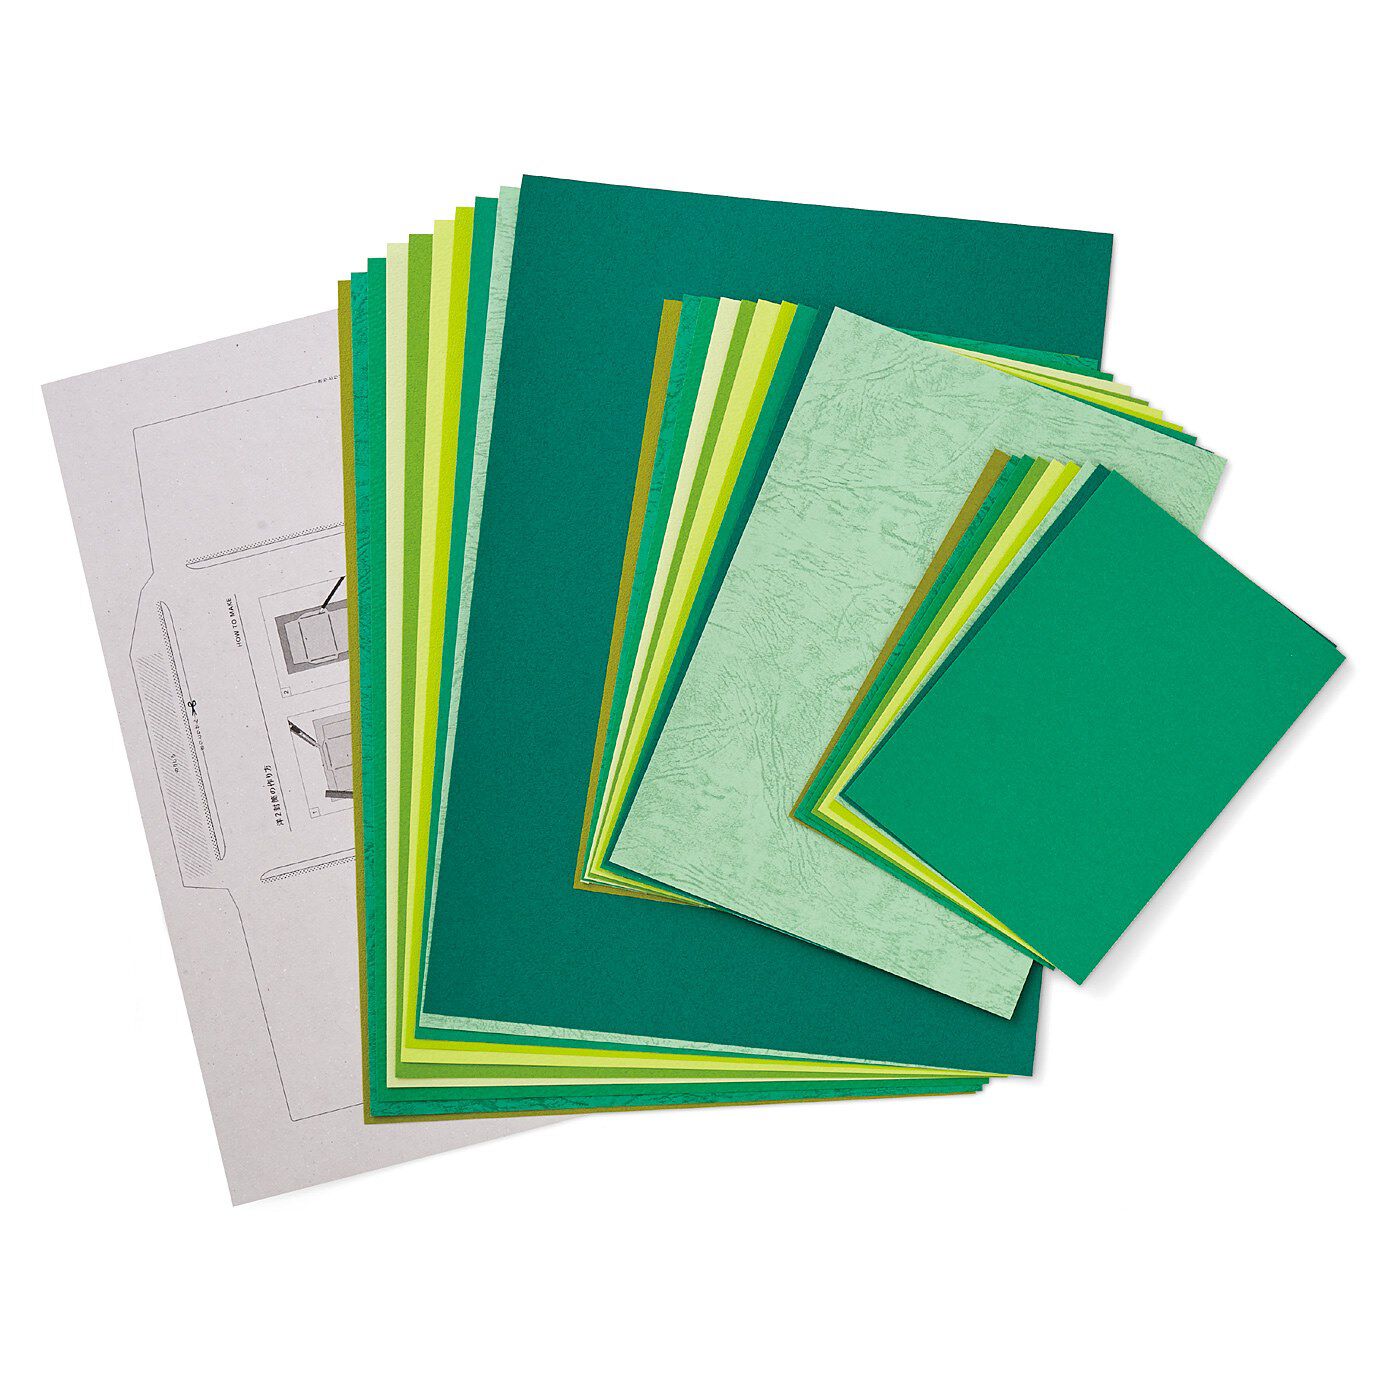 OSYAIRO | 紙の専門商社竹尾が選ぶ色を楽しむ紙セット〈緑〉